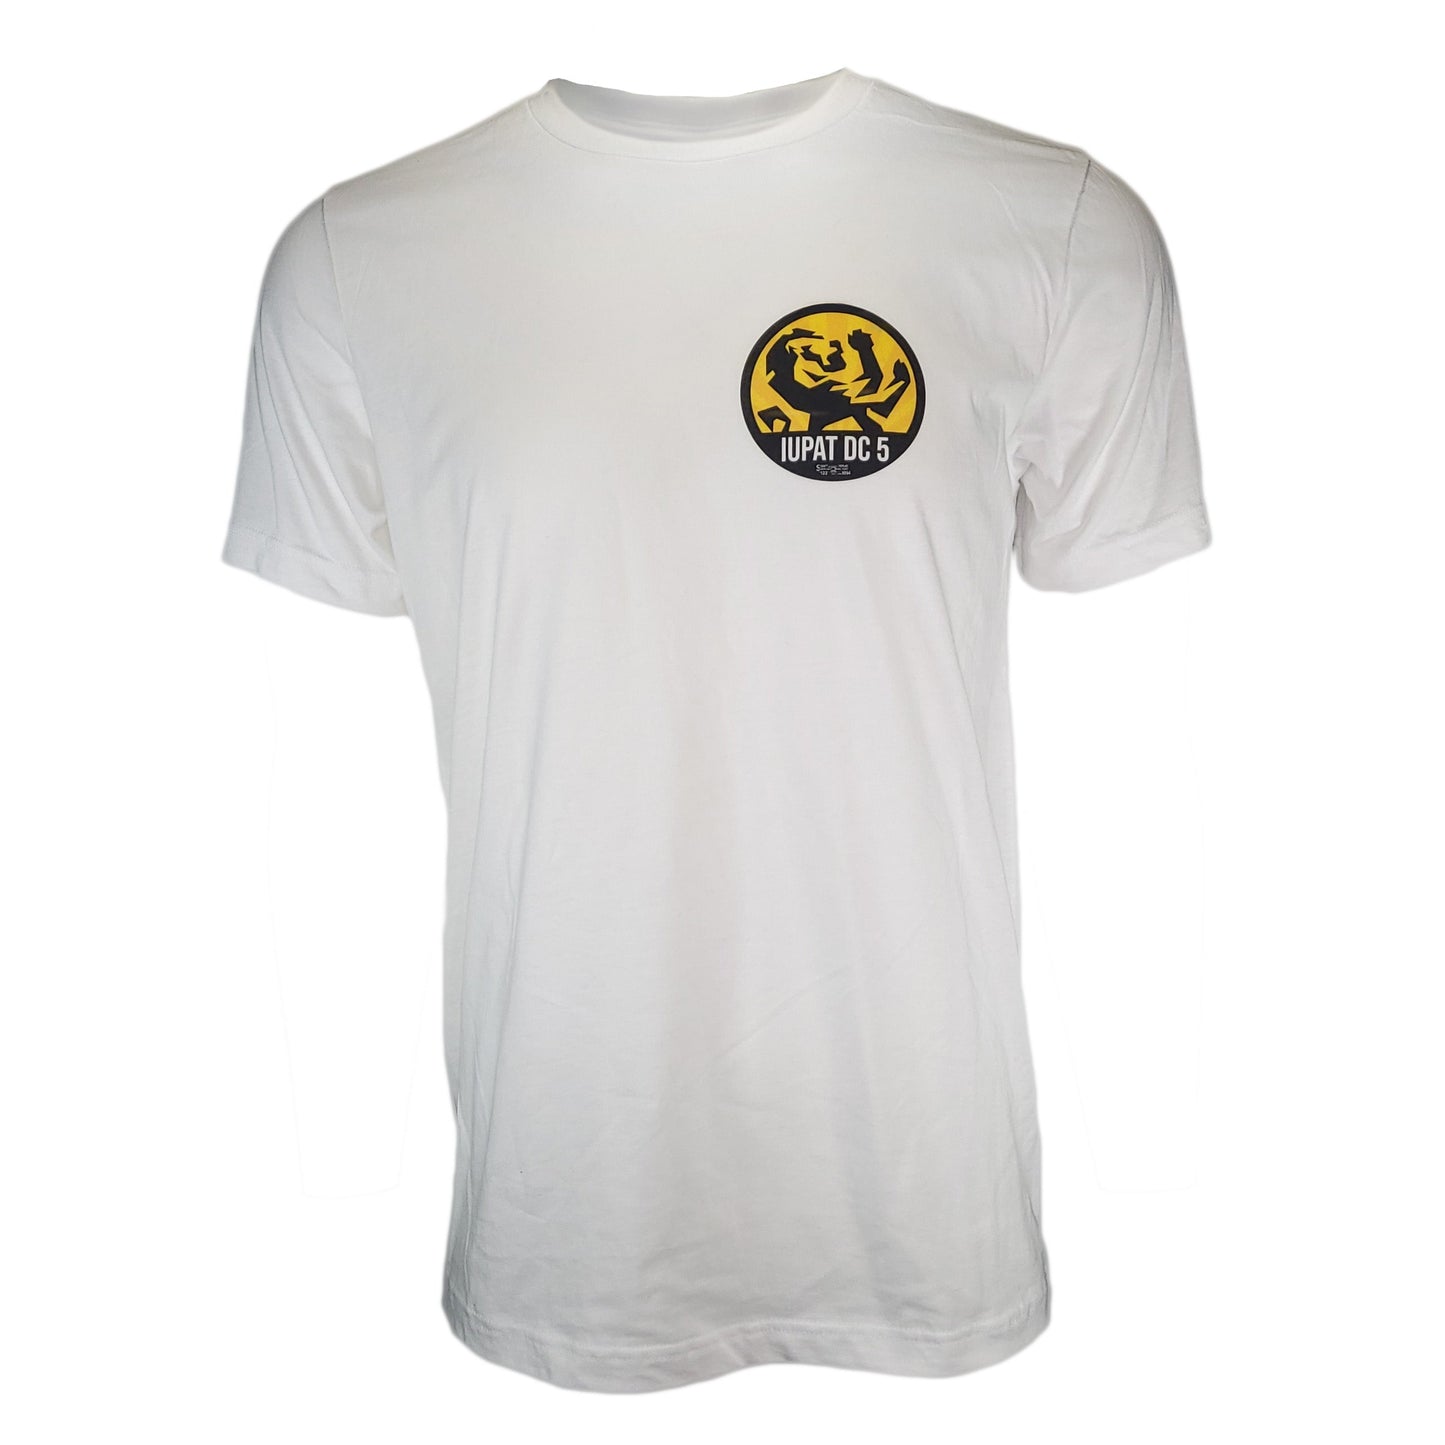 MerchBlue Union-Printed Custom T-shirt - Three Stars Design